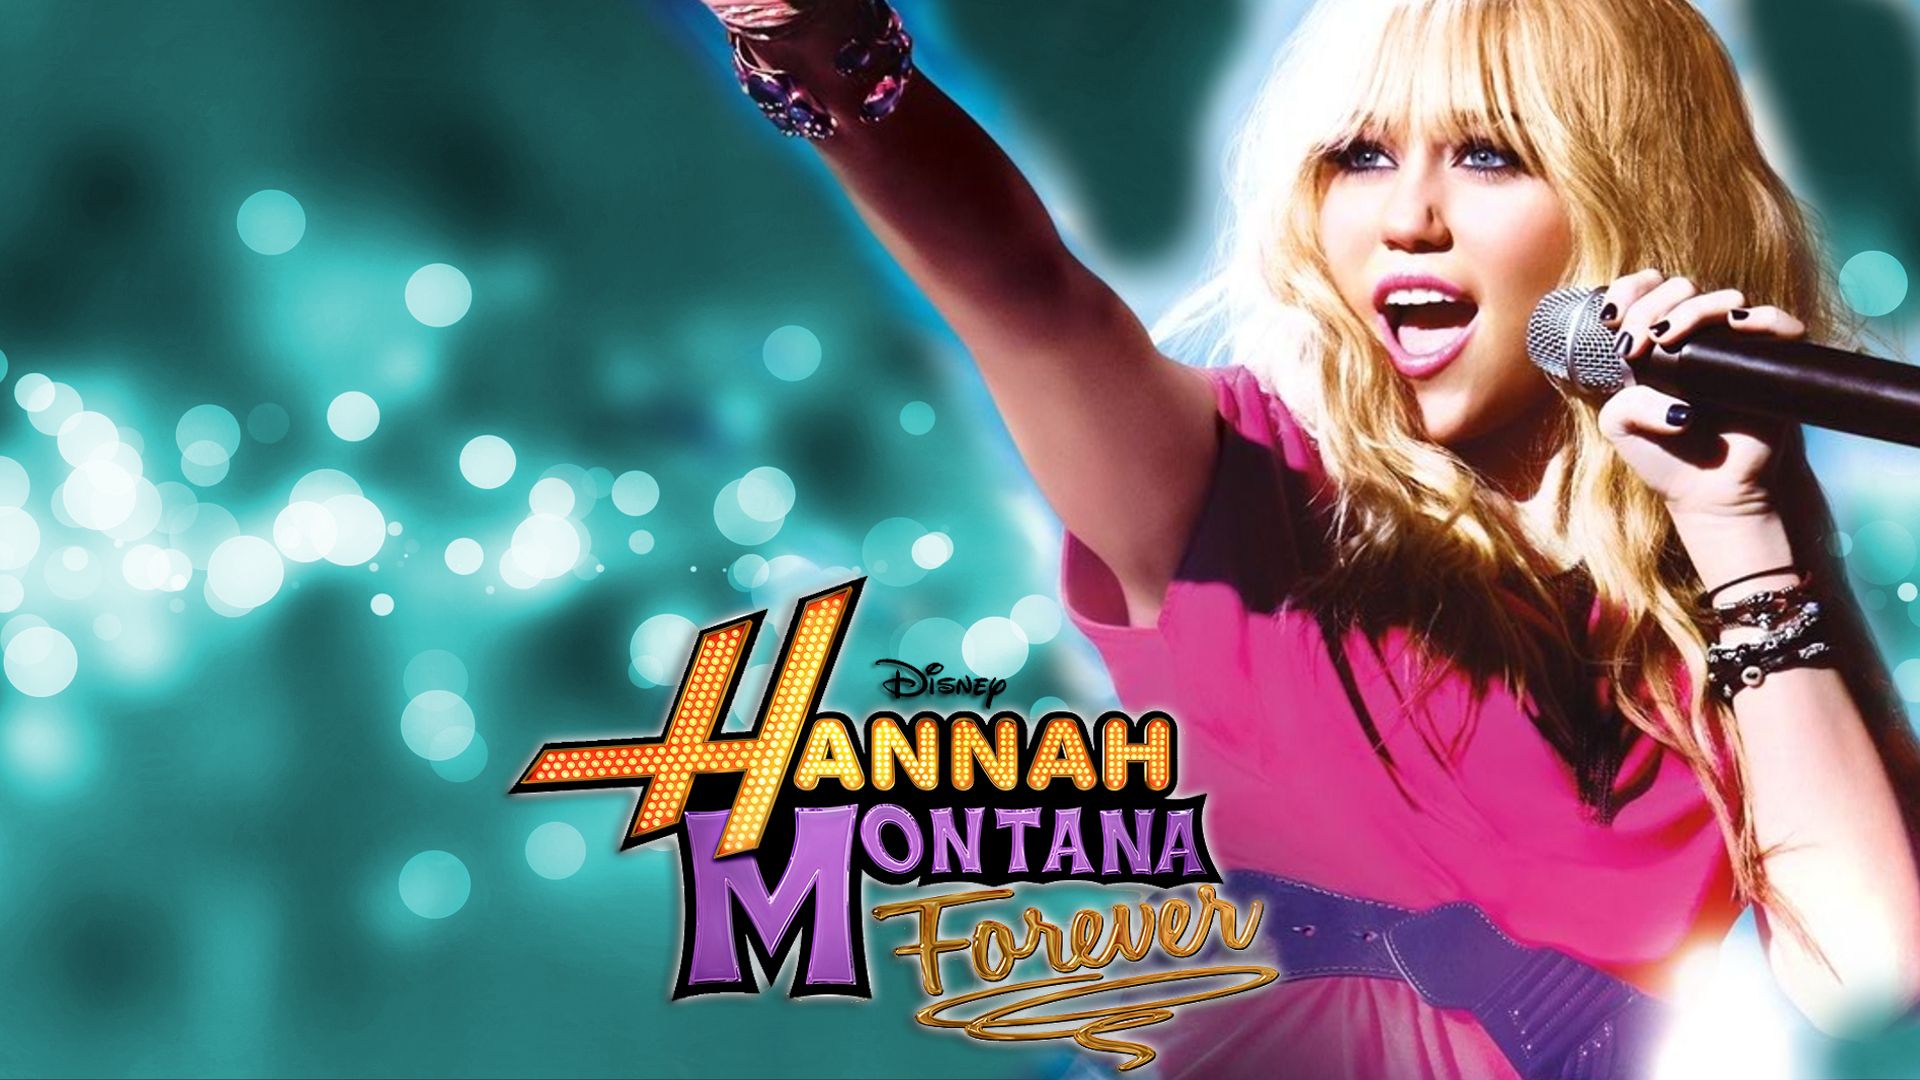 hannah montana season 1 wallpaper 14  Hannah Montana Wallpaper 15481651   Fanpop